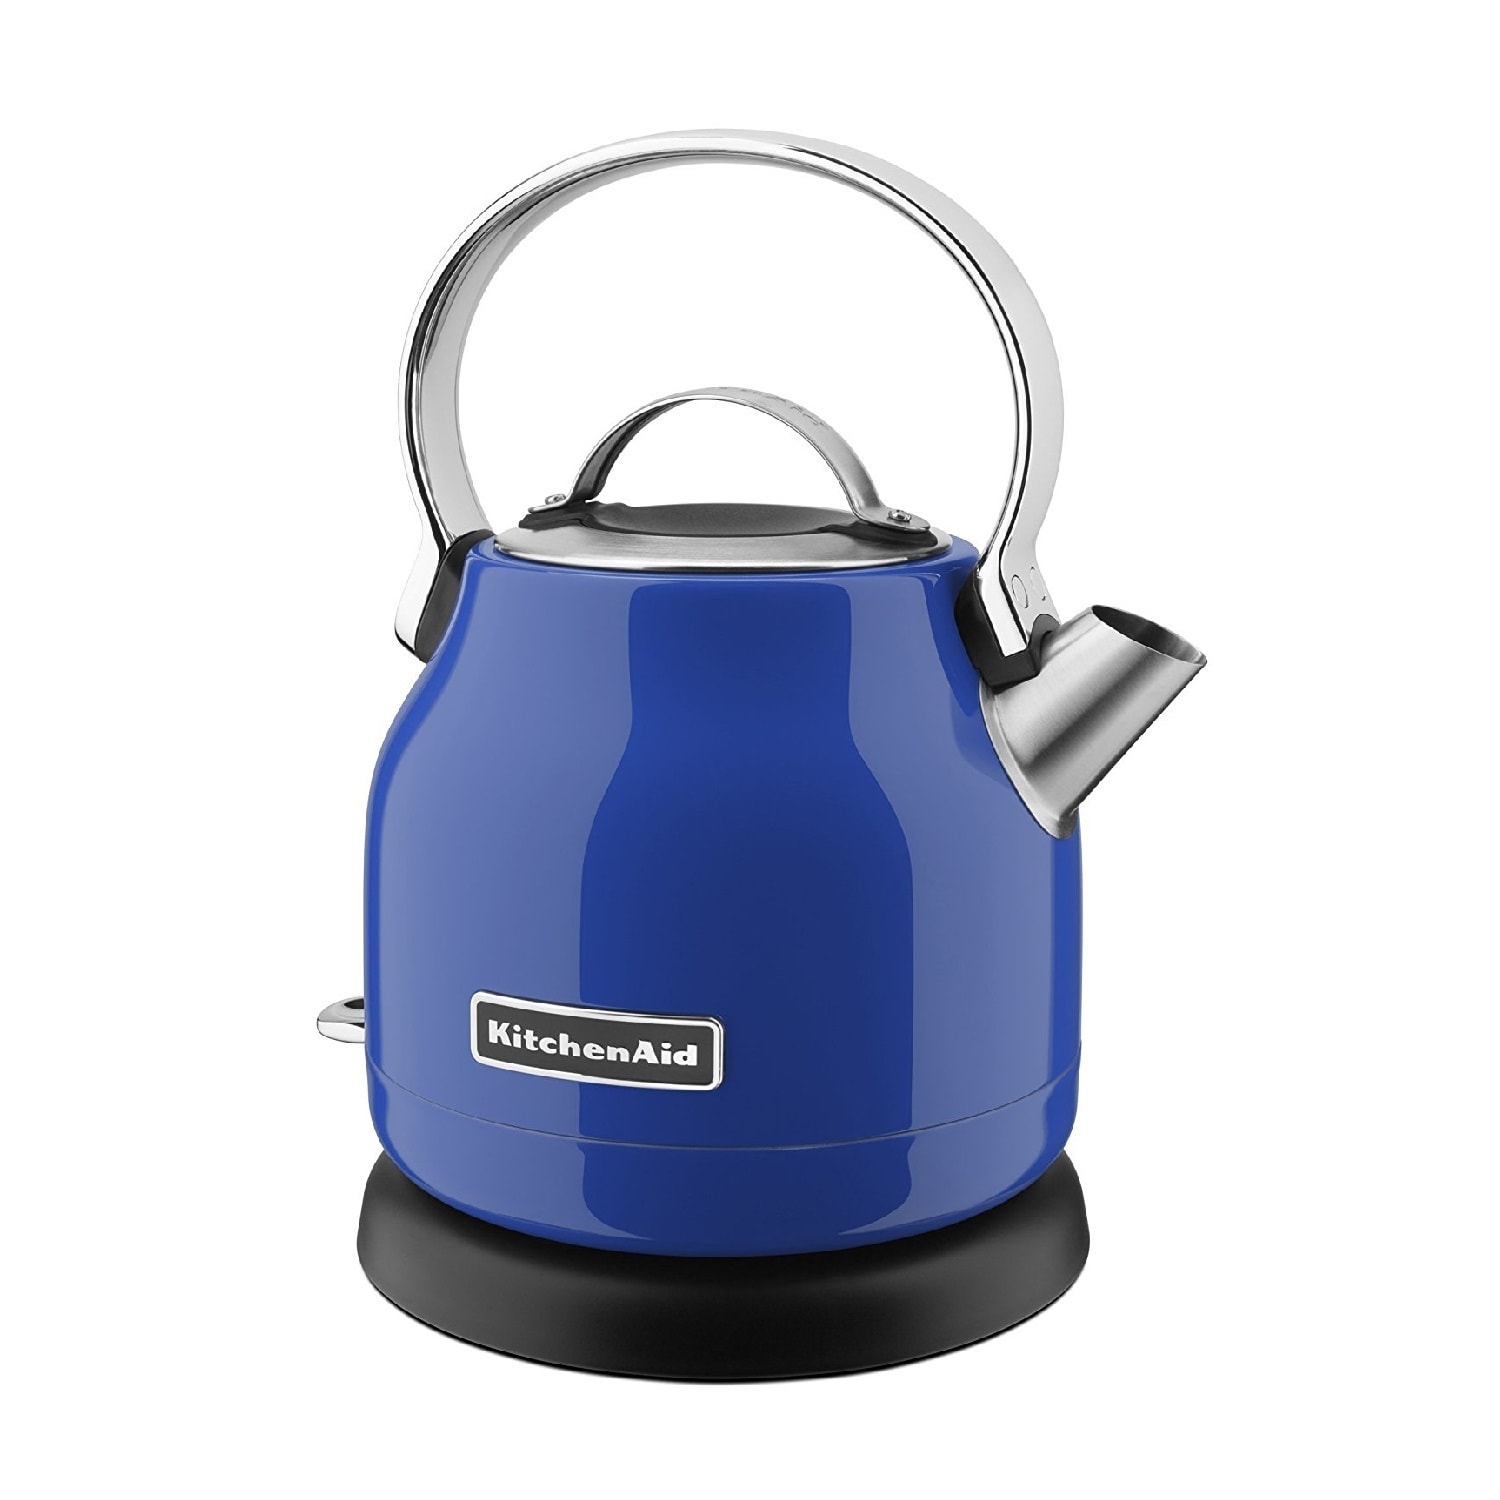 Купить чайник электрический в минске. Китчен аид чайник. Kitchenaid Blue kettle. Kitchenaid 5kek1222bsx. Китчен эйд чайник электрический.